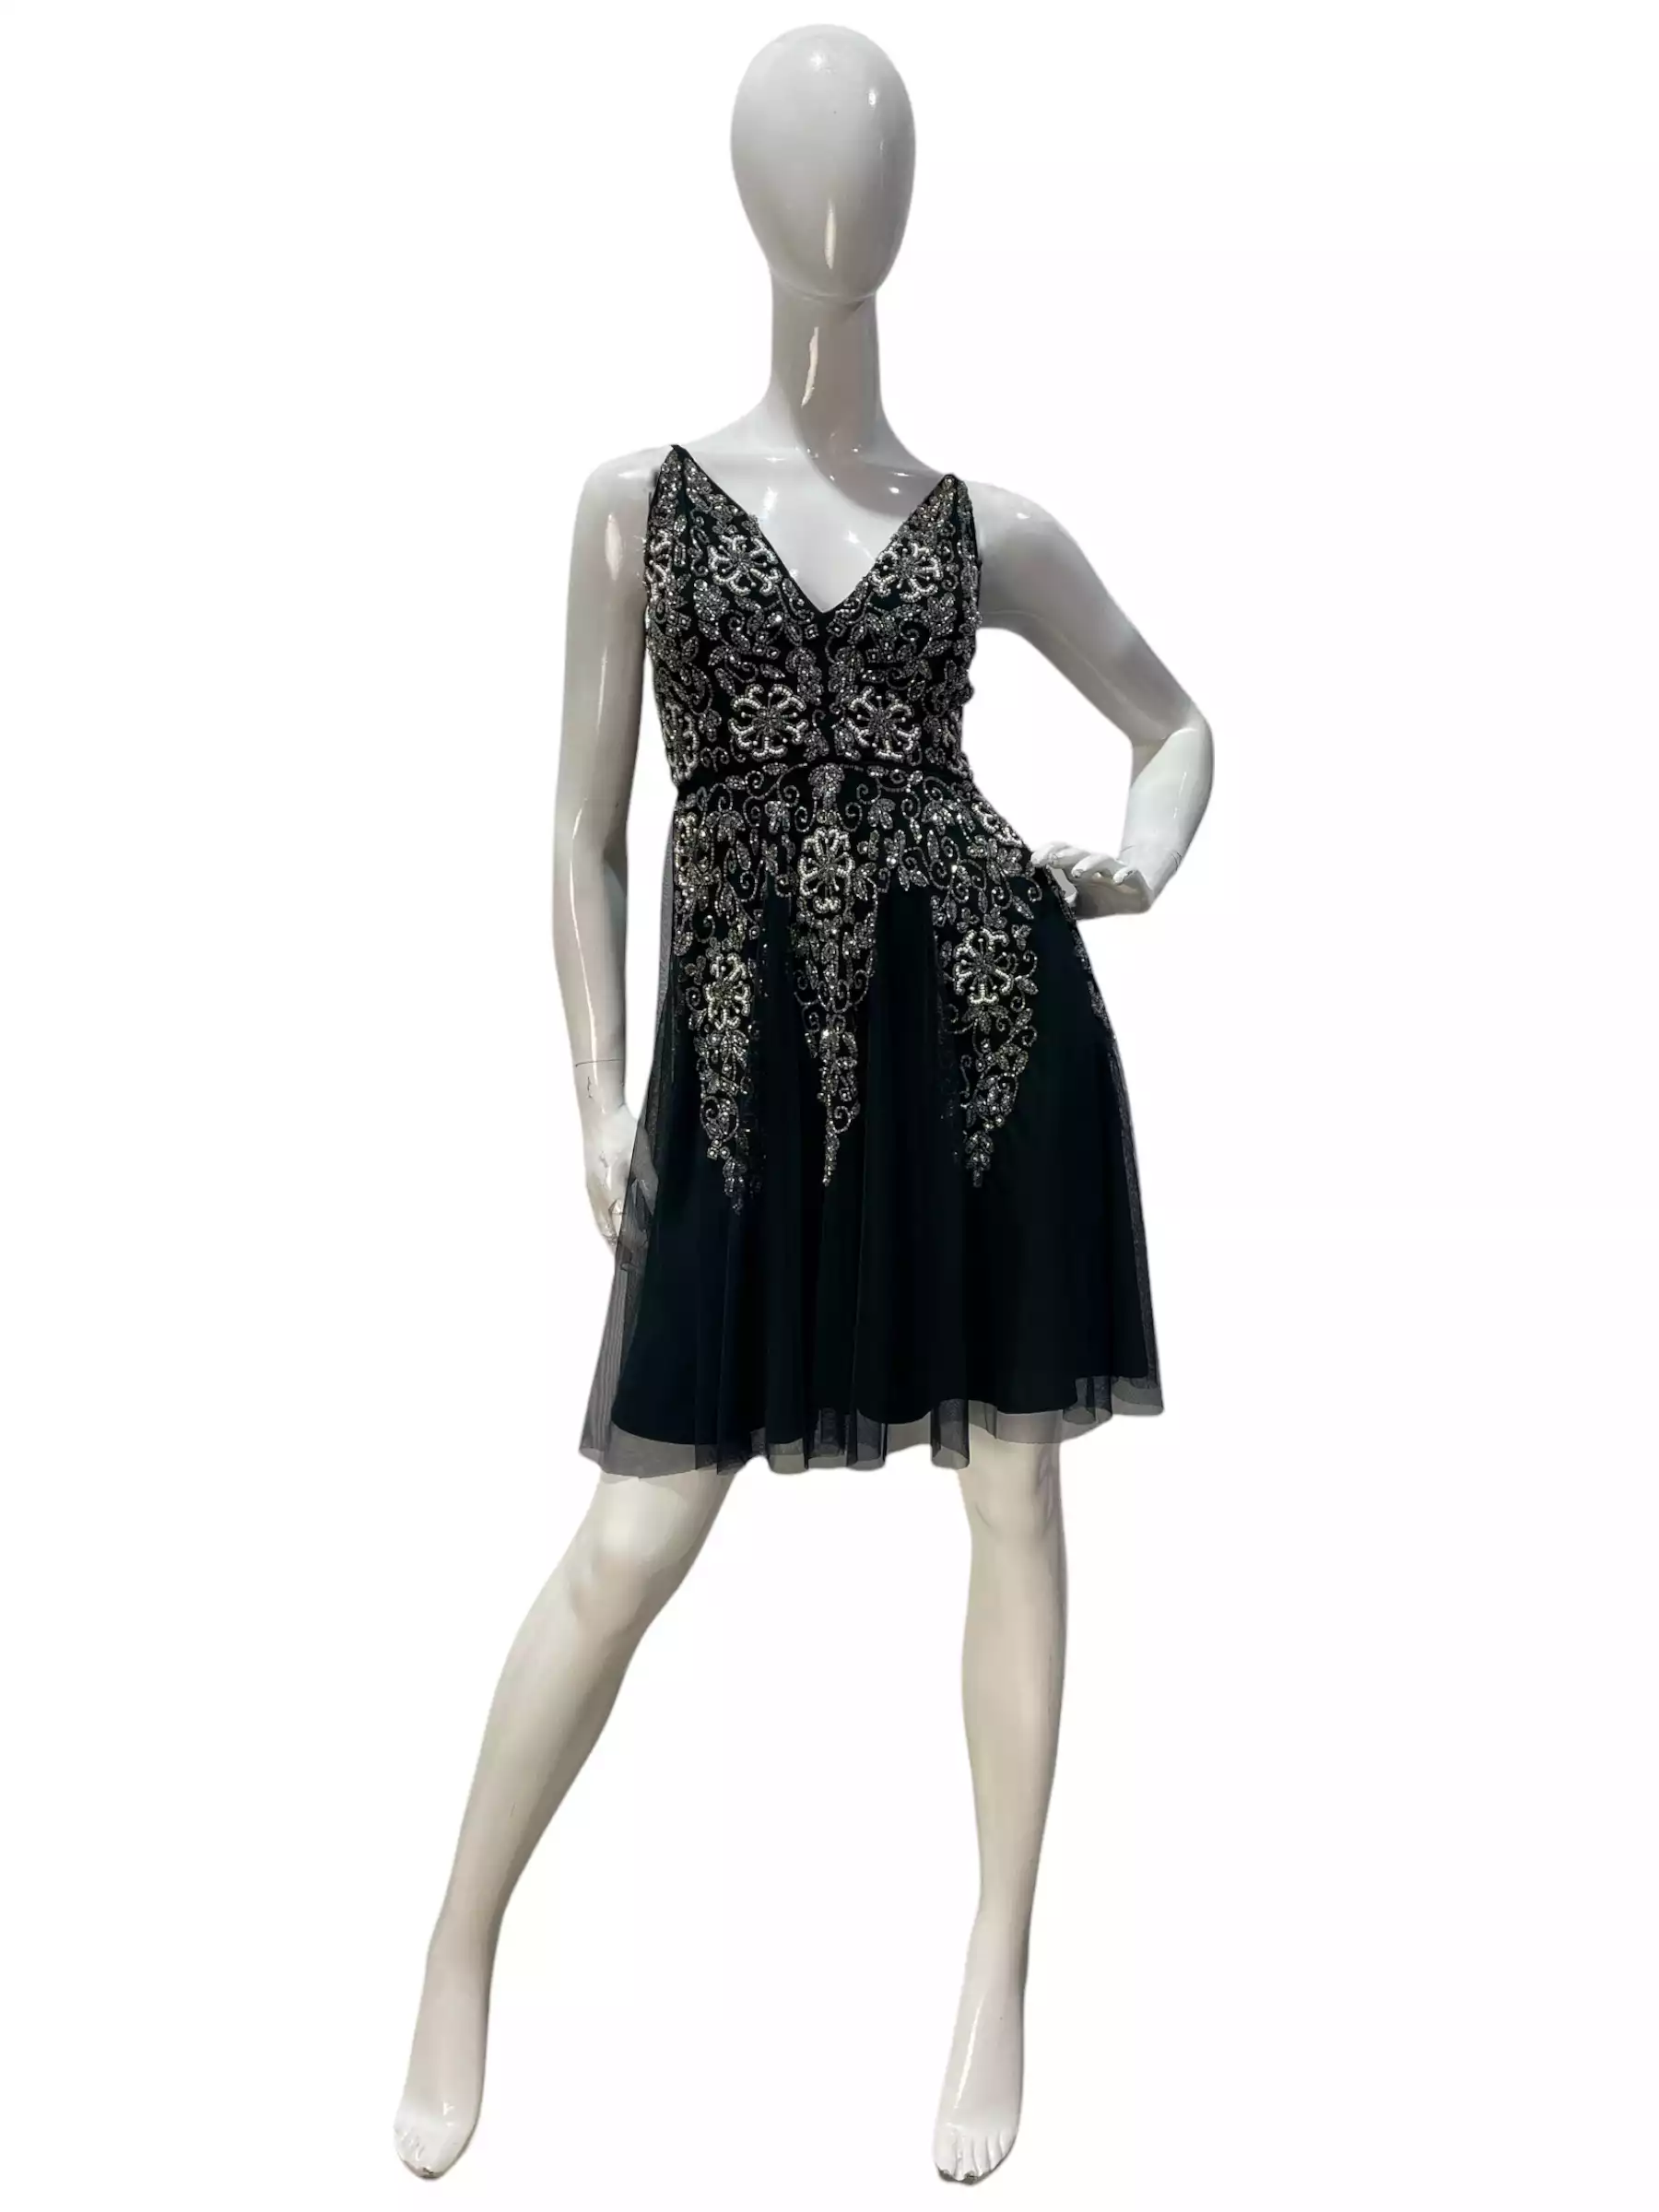 Dress by Lace & Beads